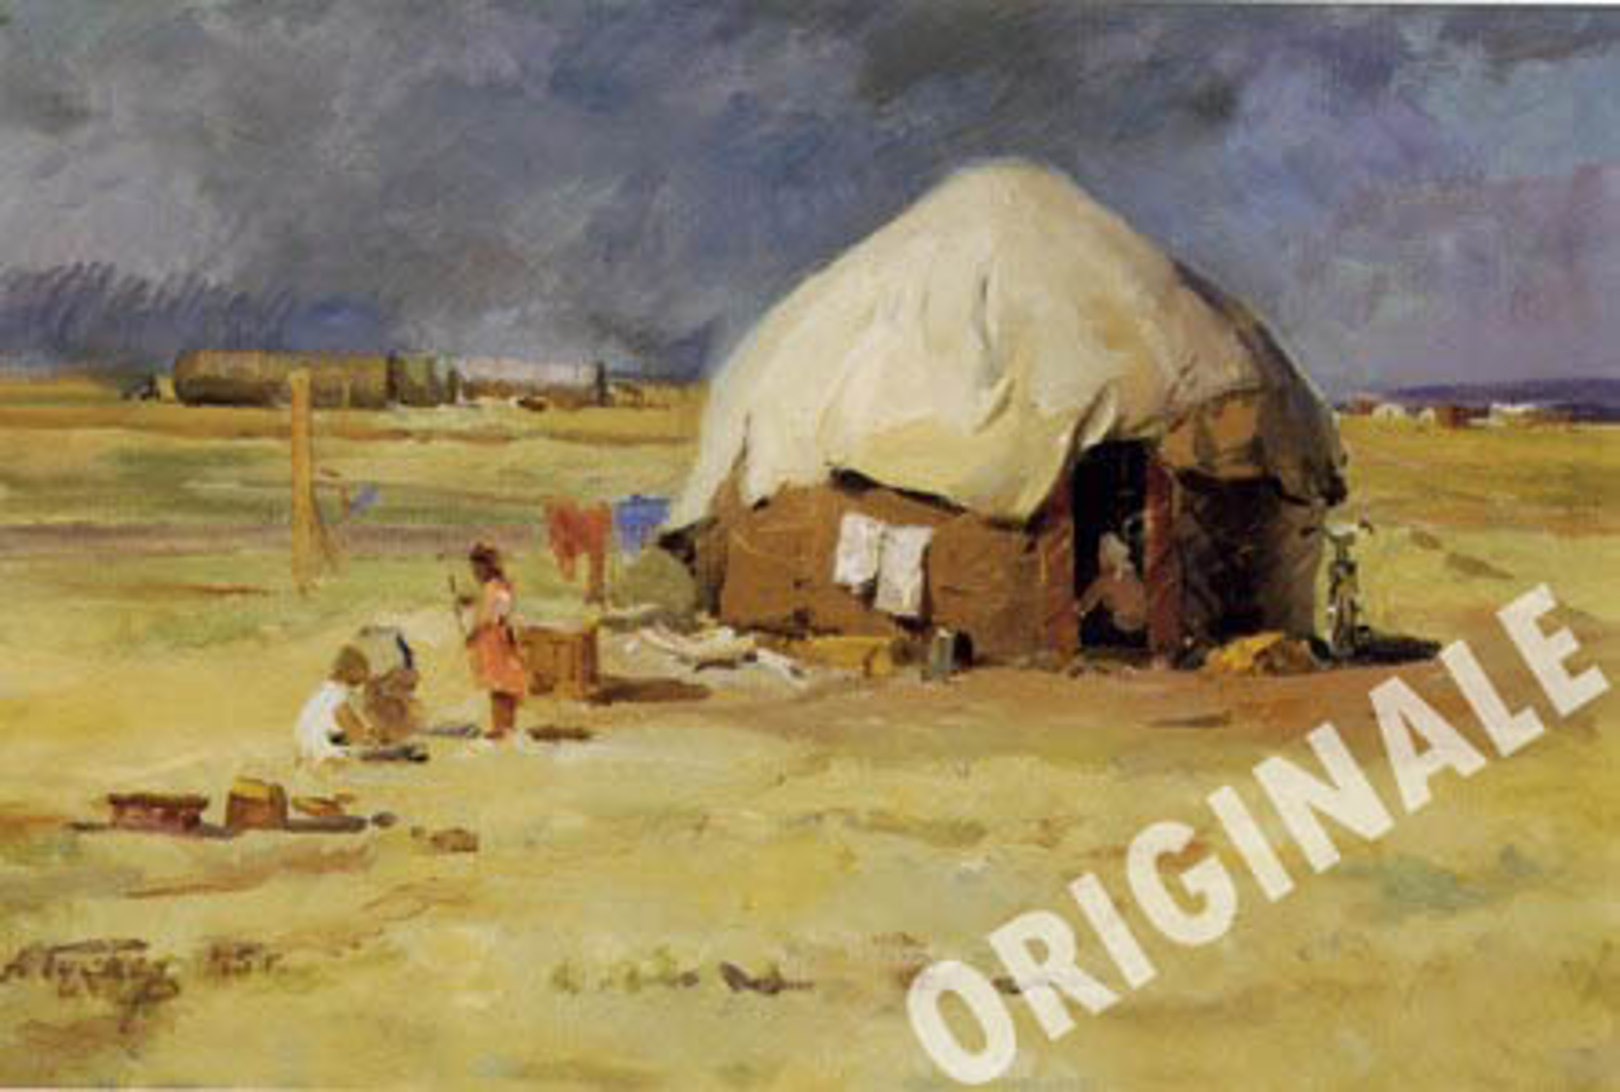 Aleksandr Gulyaev - Nomad's tent virgin lands